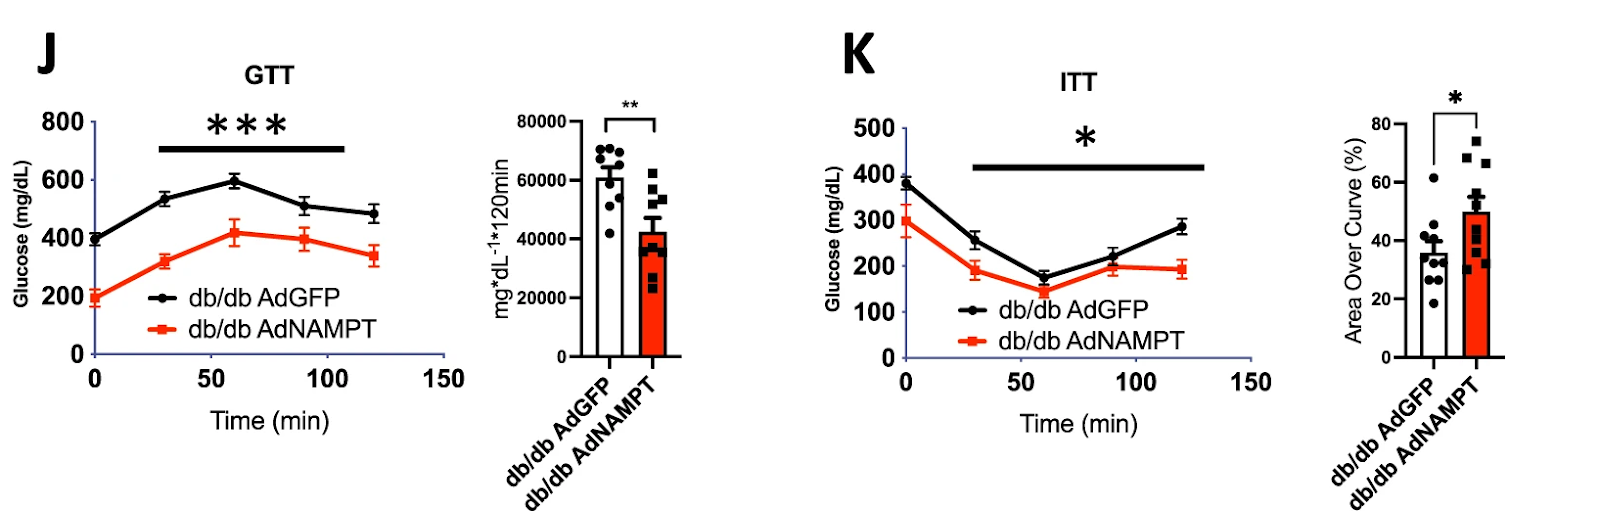 Liver NAMPT enhances glucose homeostasis in diabetic mice